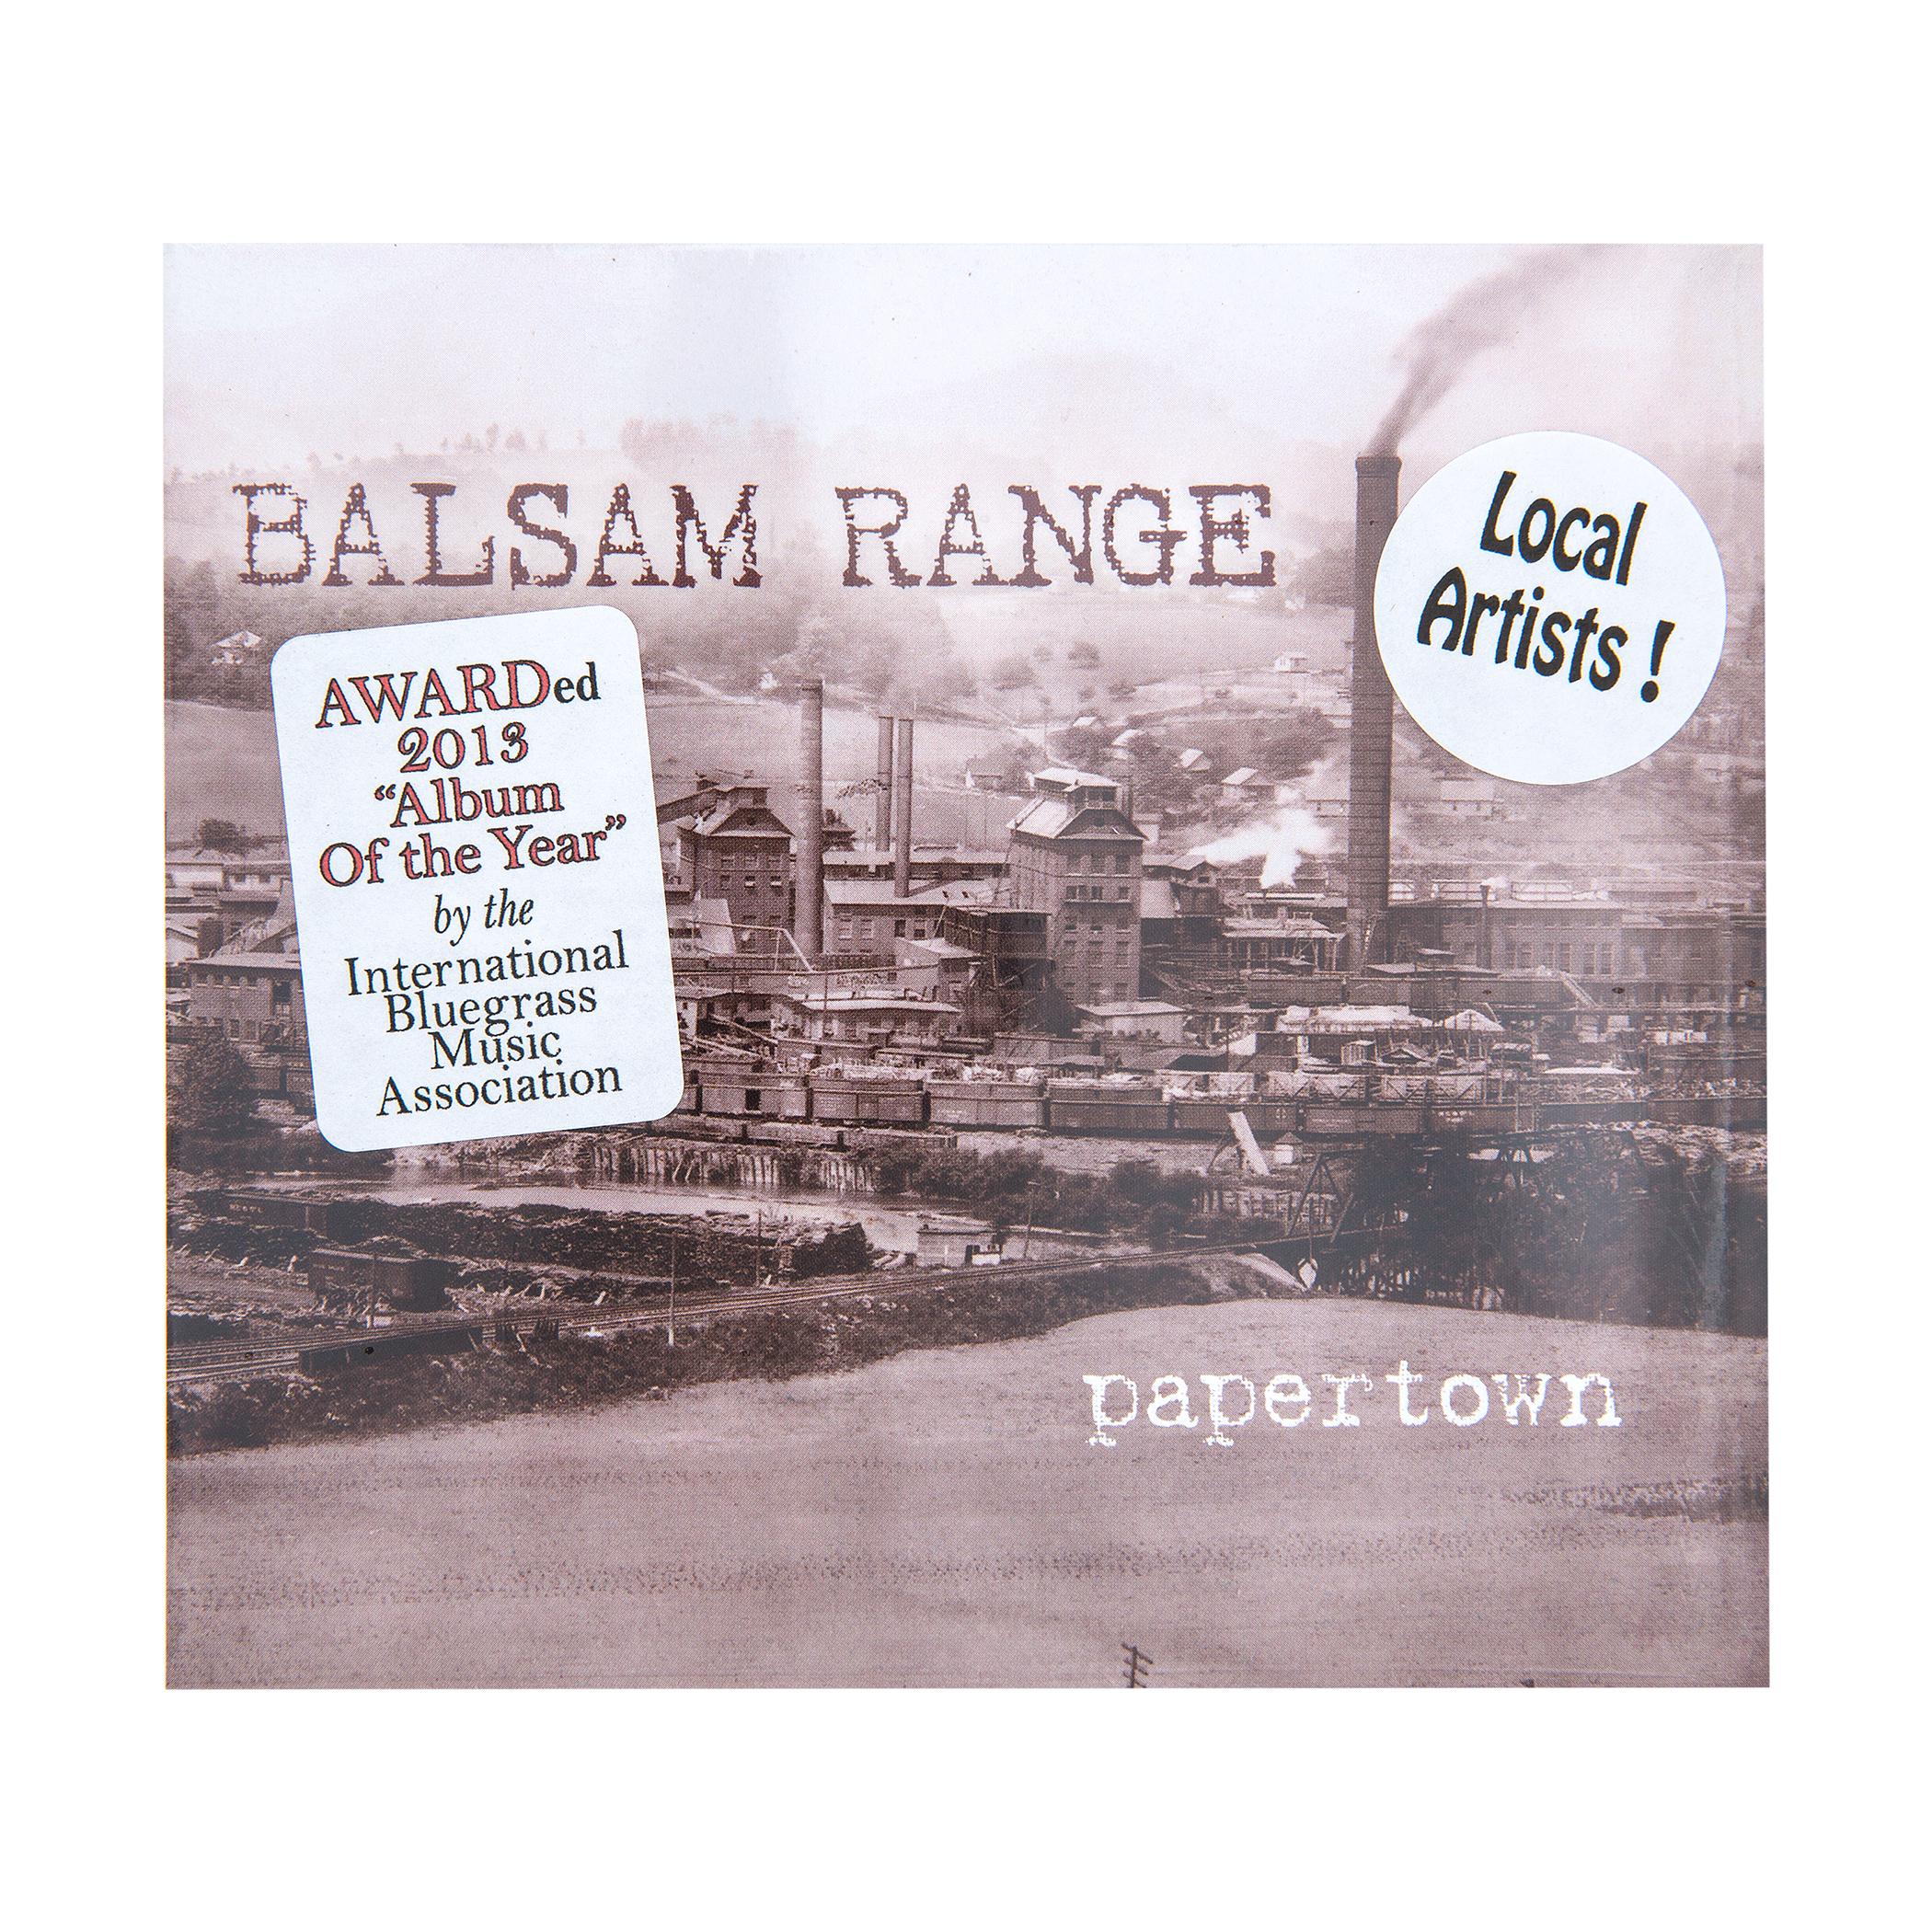  Papertown : Balsam Range Cd